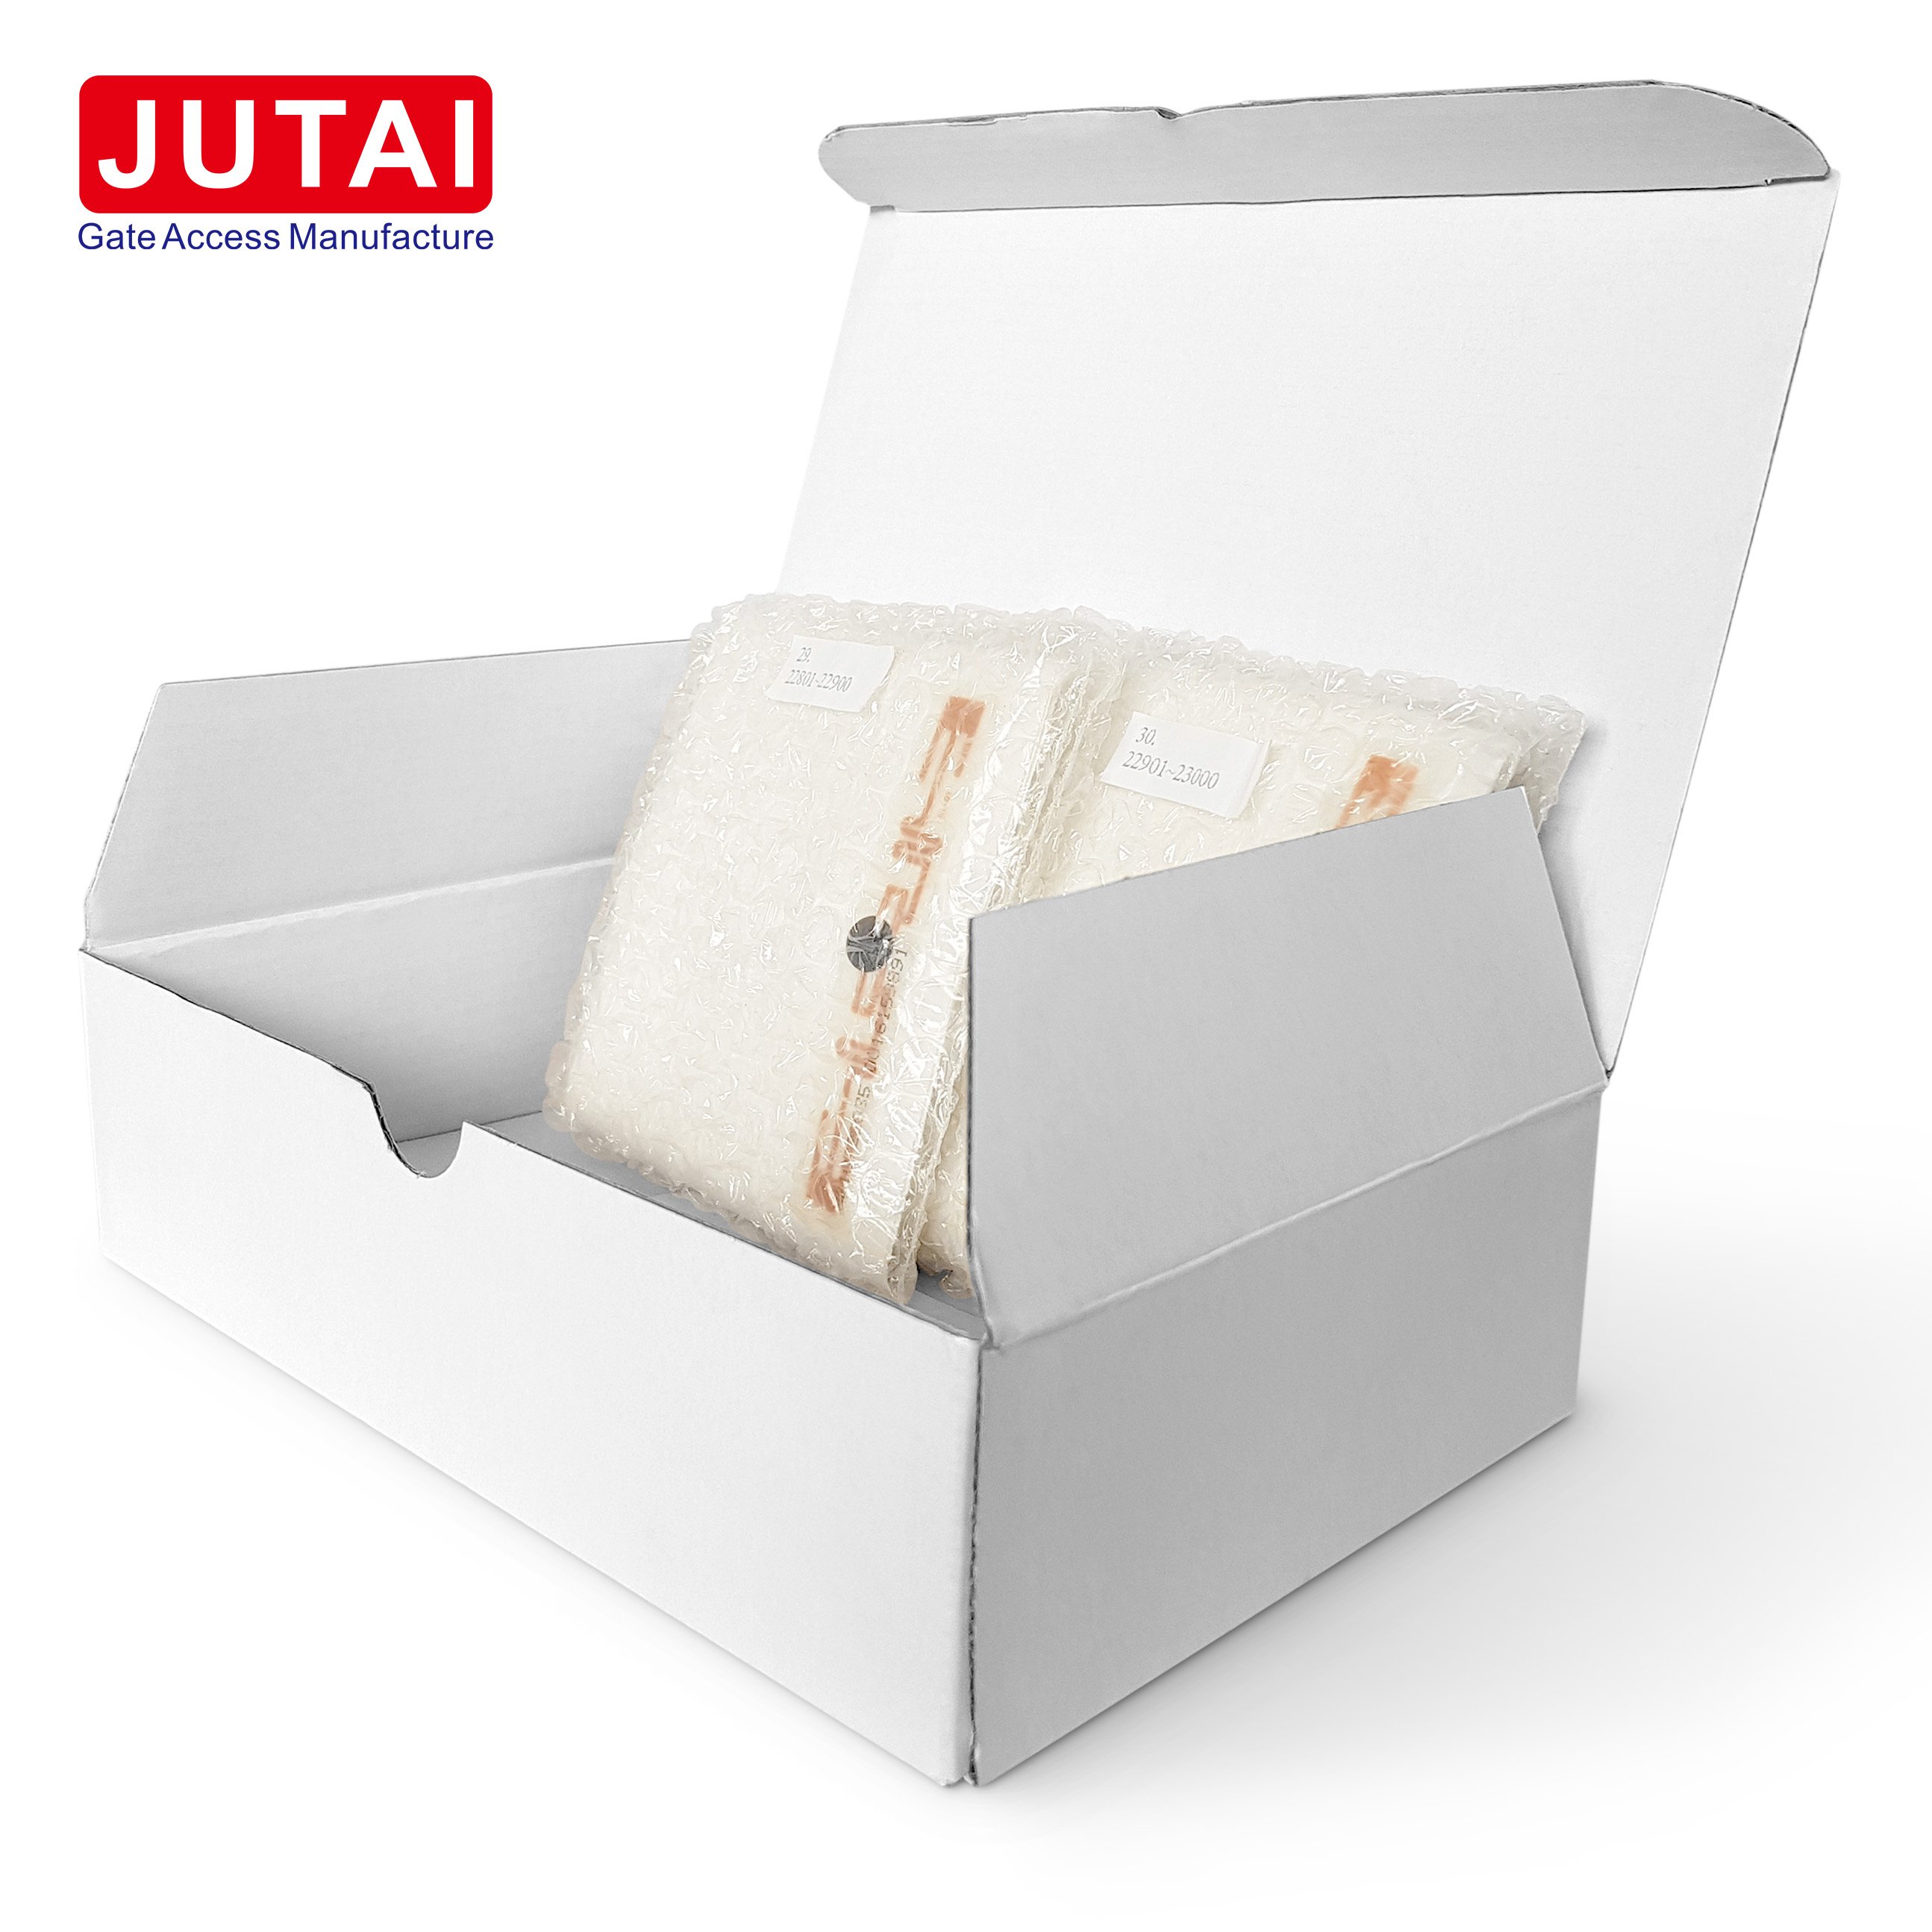 JUTAI 7-9M ملصق UHF طويل المدى غير فعال لتطبيق الوصول إلى بوابة الحاجز السكني